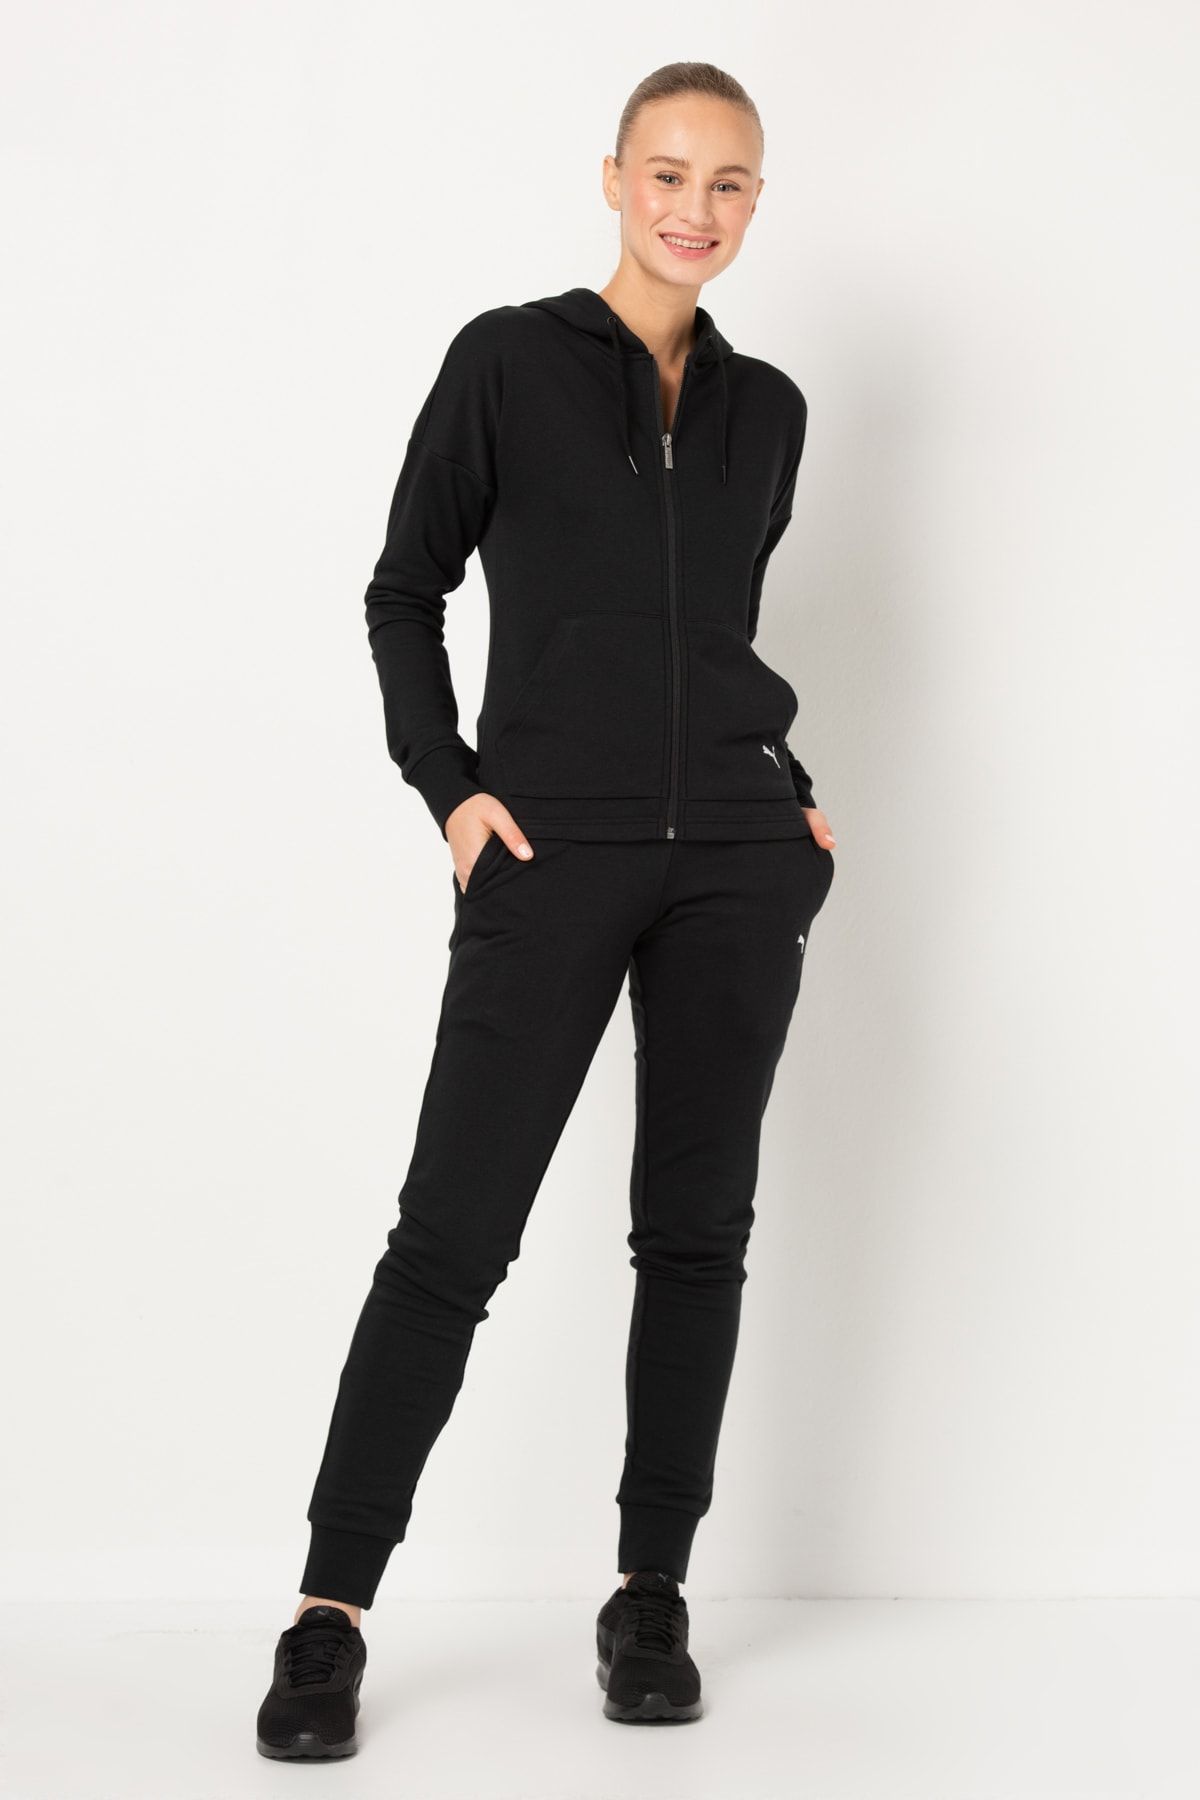 Puma Kadın Eşofman Takımı - Clean Sweat Suit CL TR - 84487601